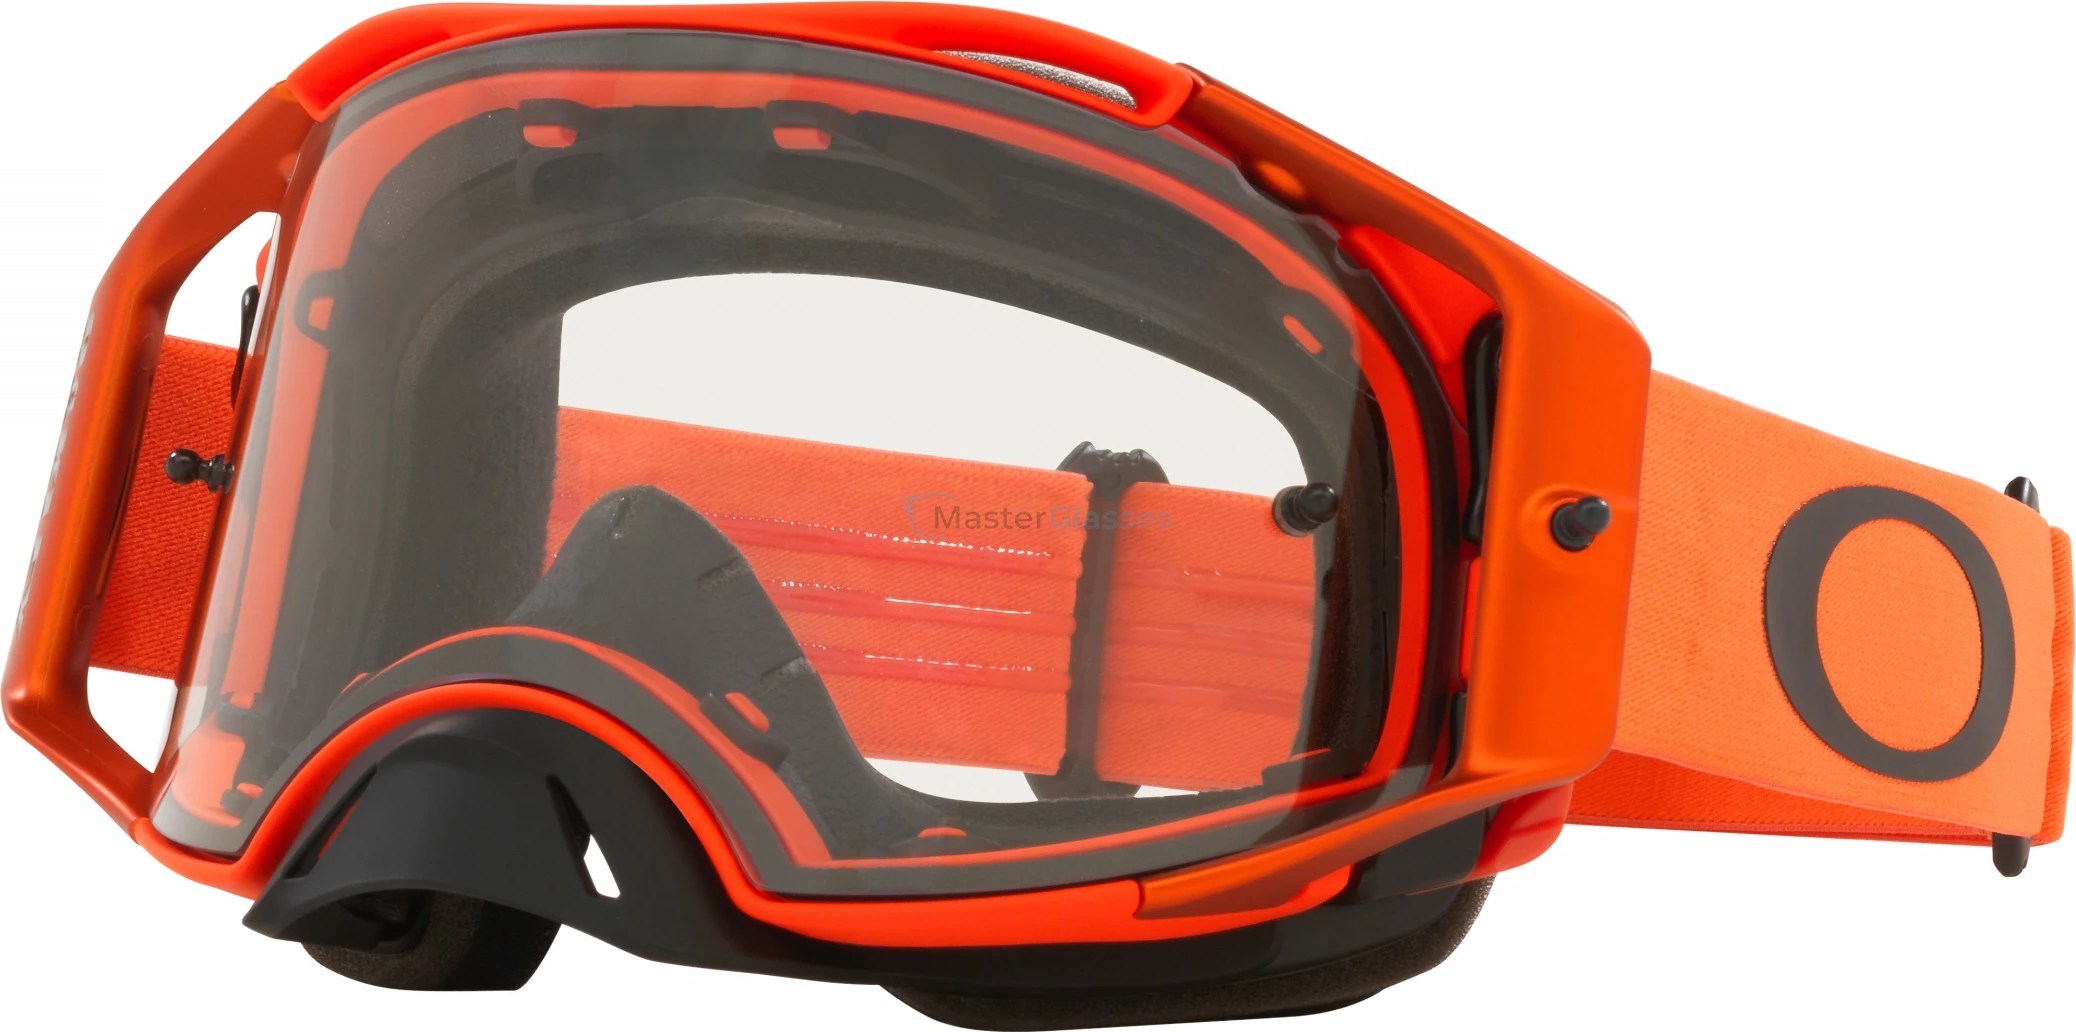    Oakley mx goggles Airbrake Mx OO7046 7046B6 Moto Orange